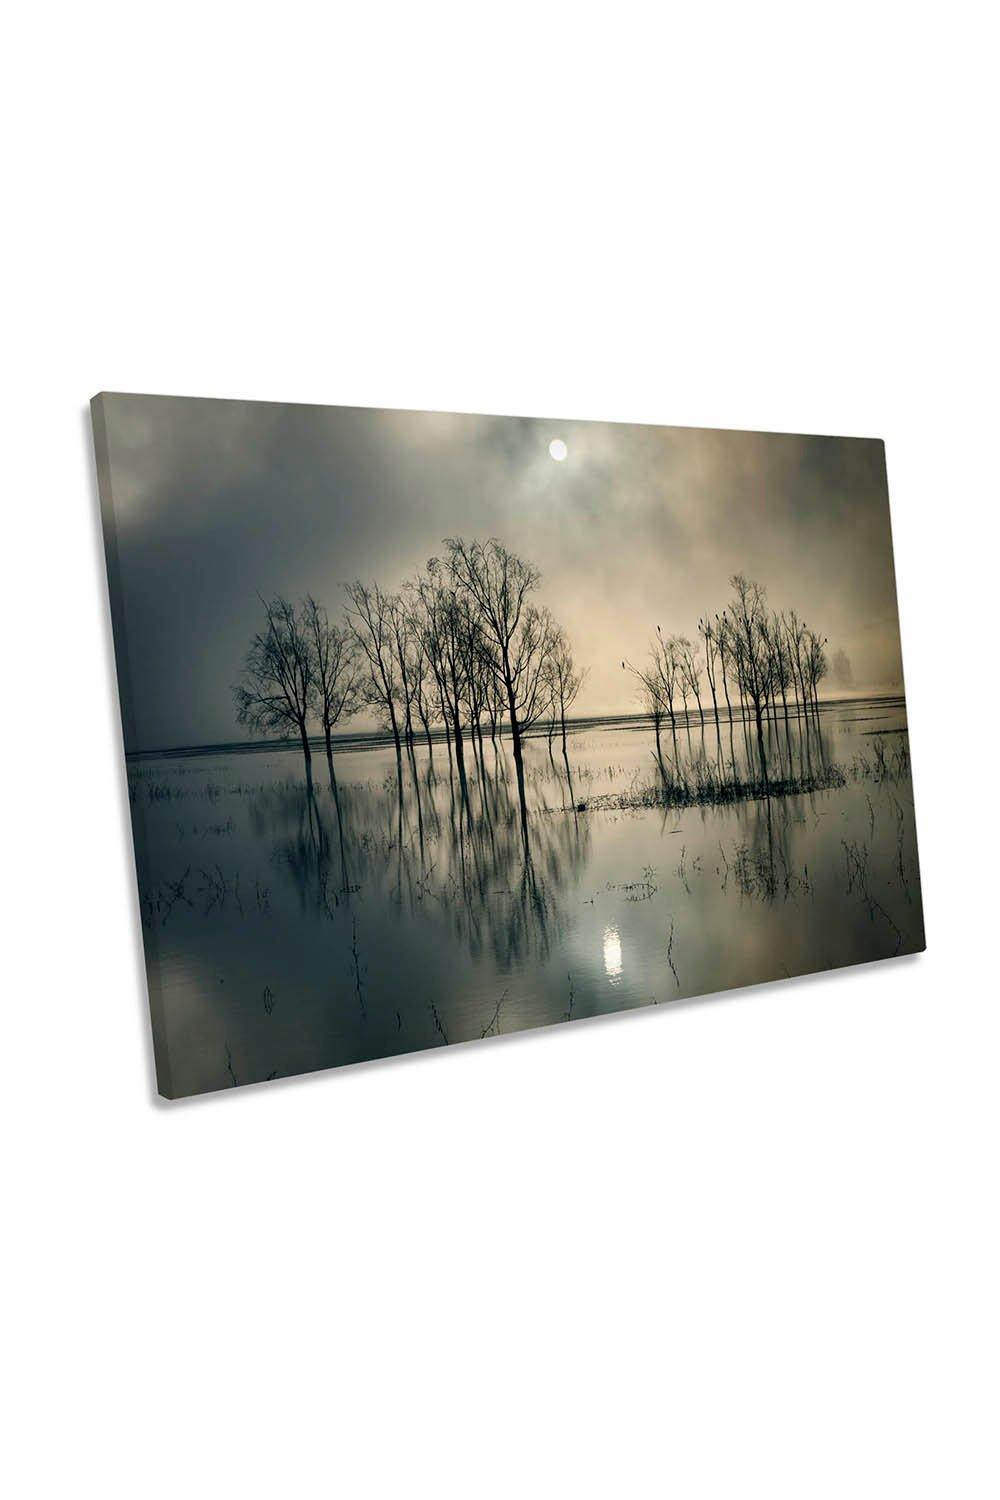 Secret Lake Misty Scenic Canvas Wall Art Picture Print